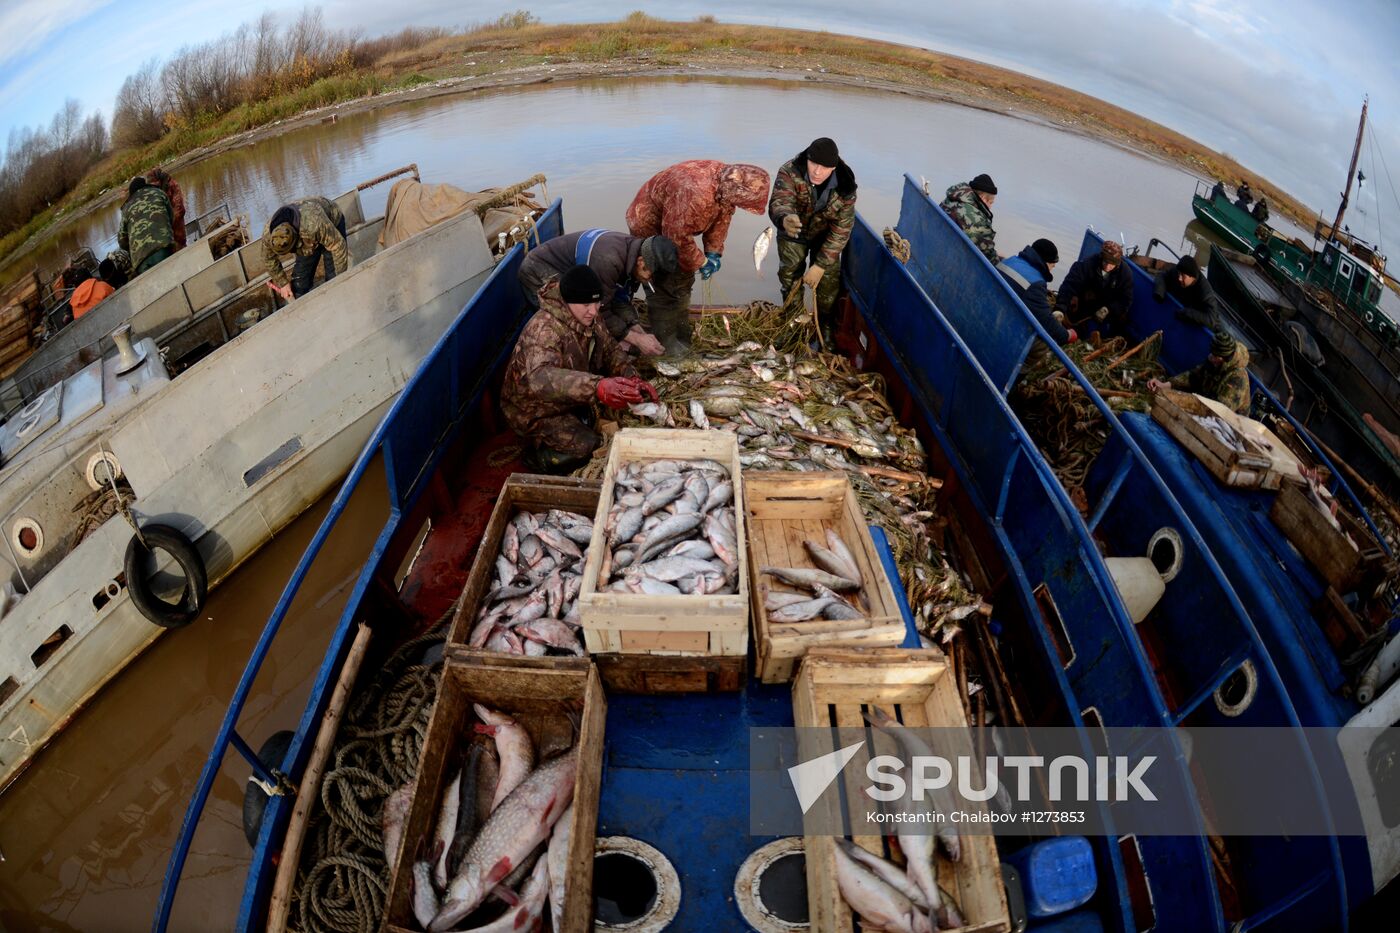 Fishing farm in Novgorod Region